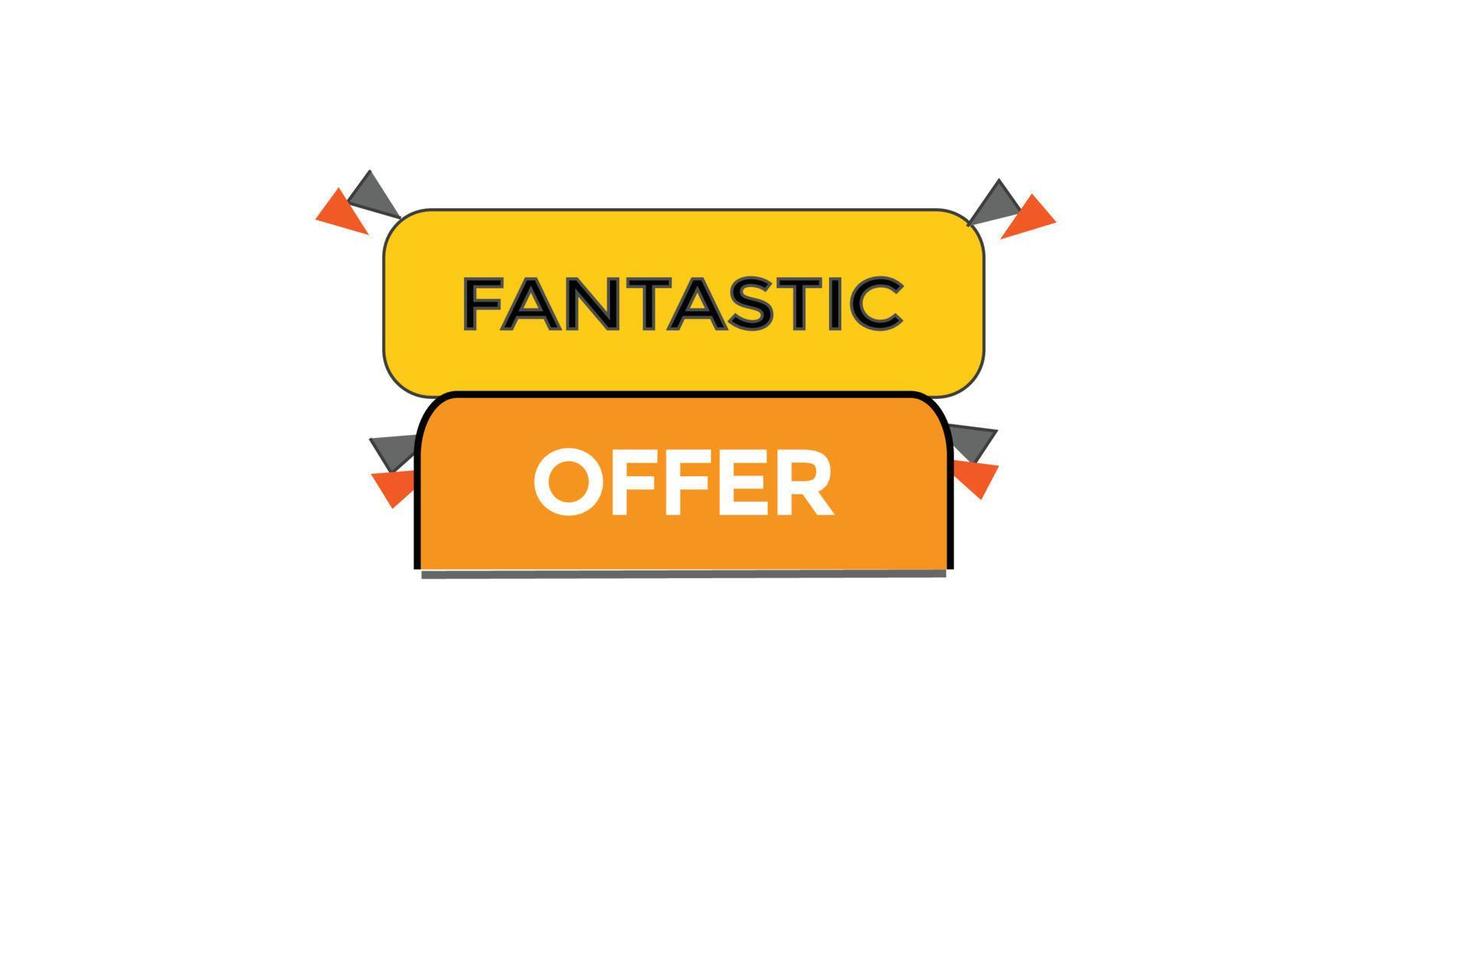 fantastic offer vectors.sign label bubble speech fantastic offer vector